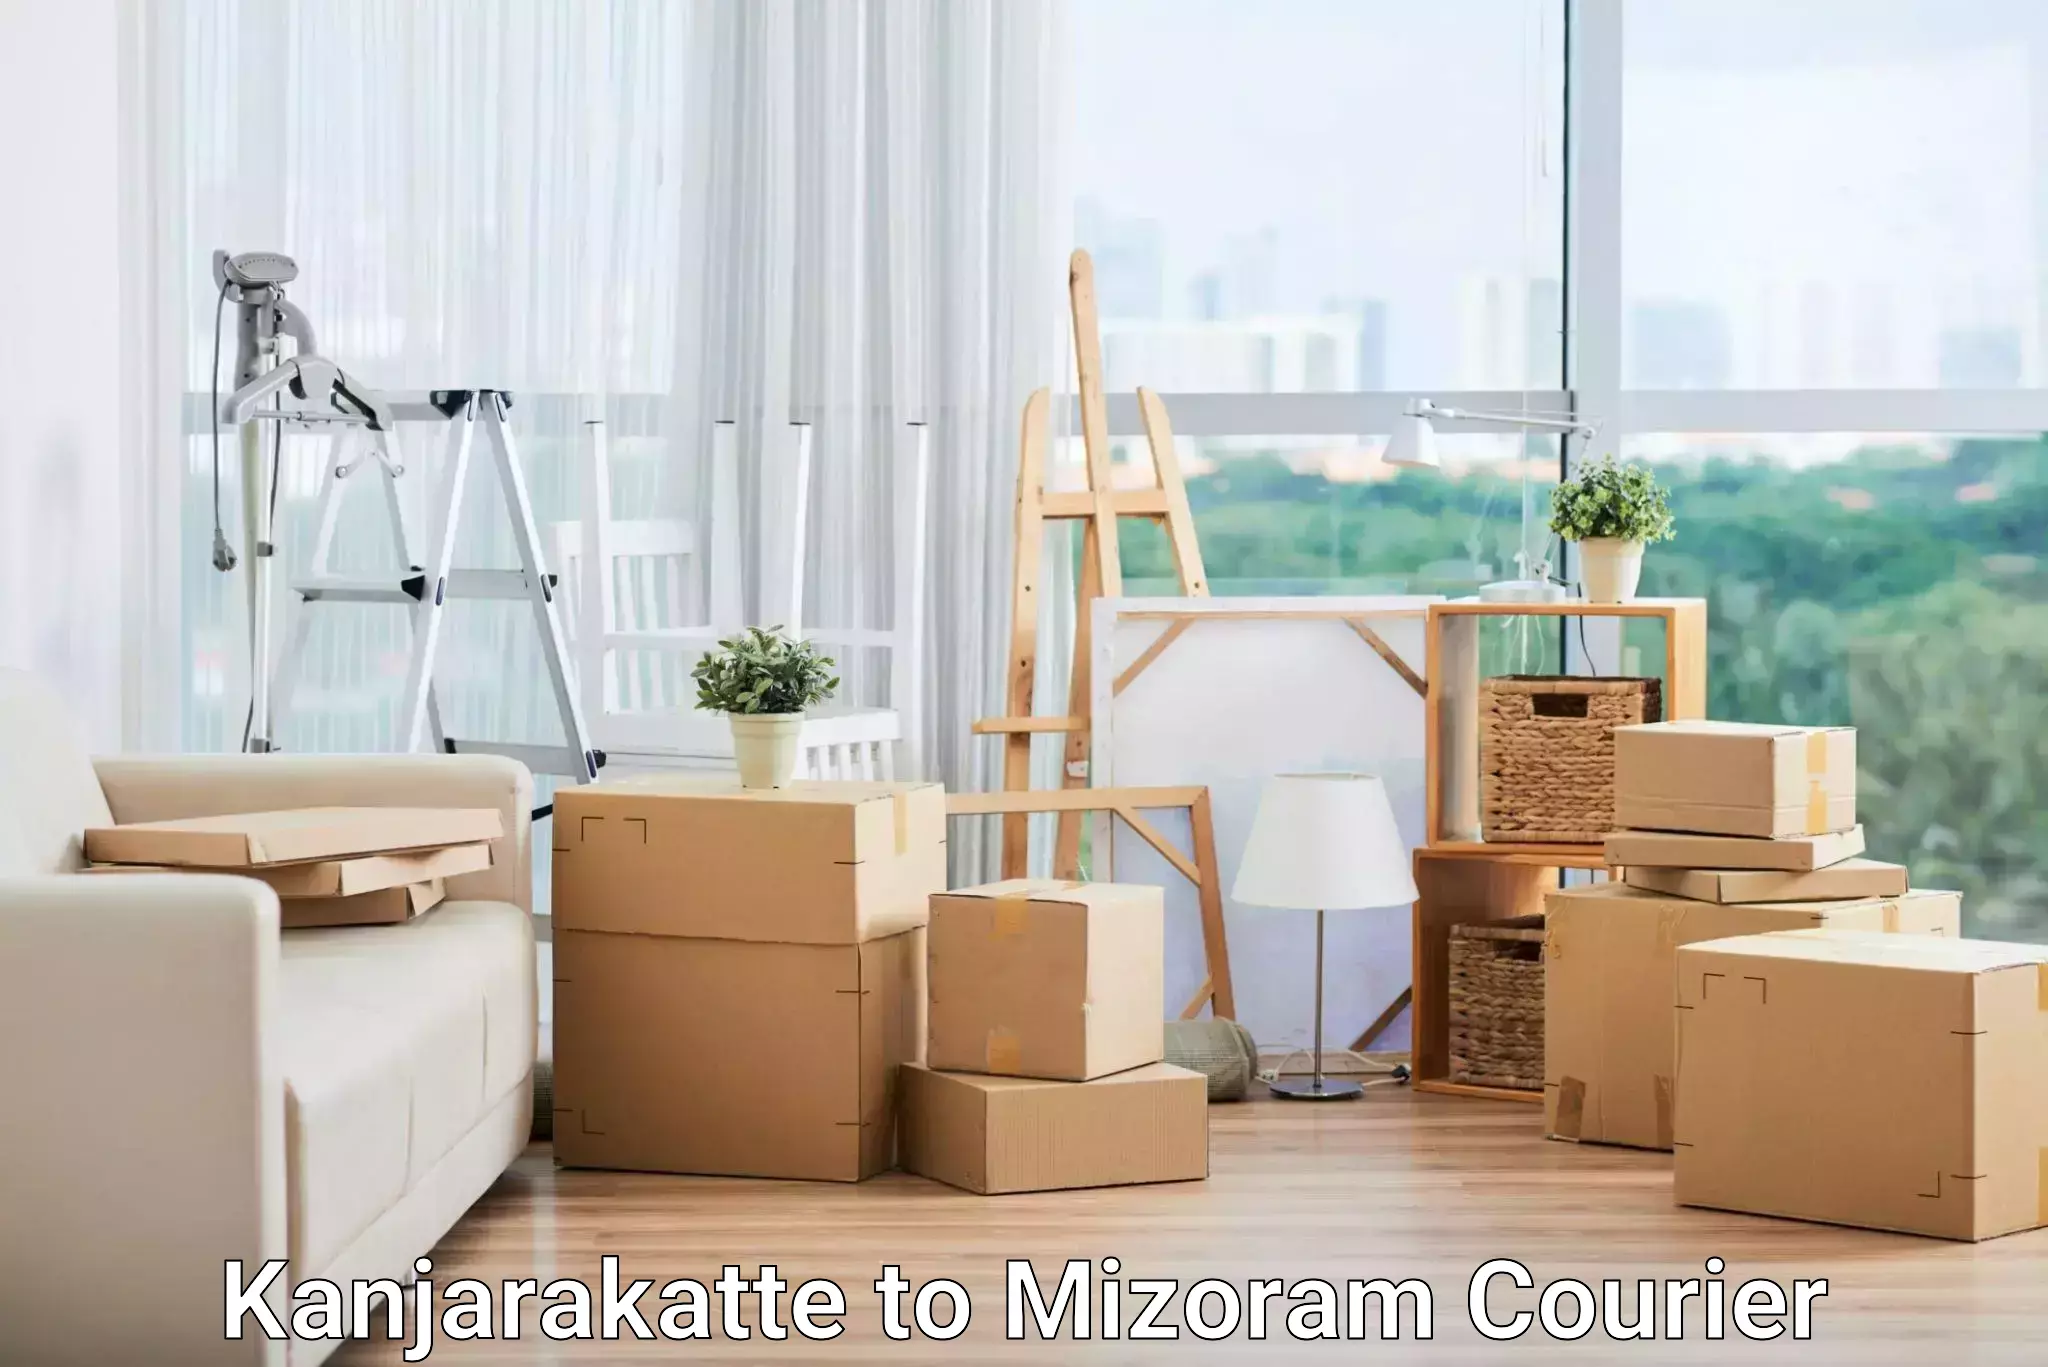 Courier service comparison in Kanjarakatte to Mizoram